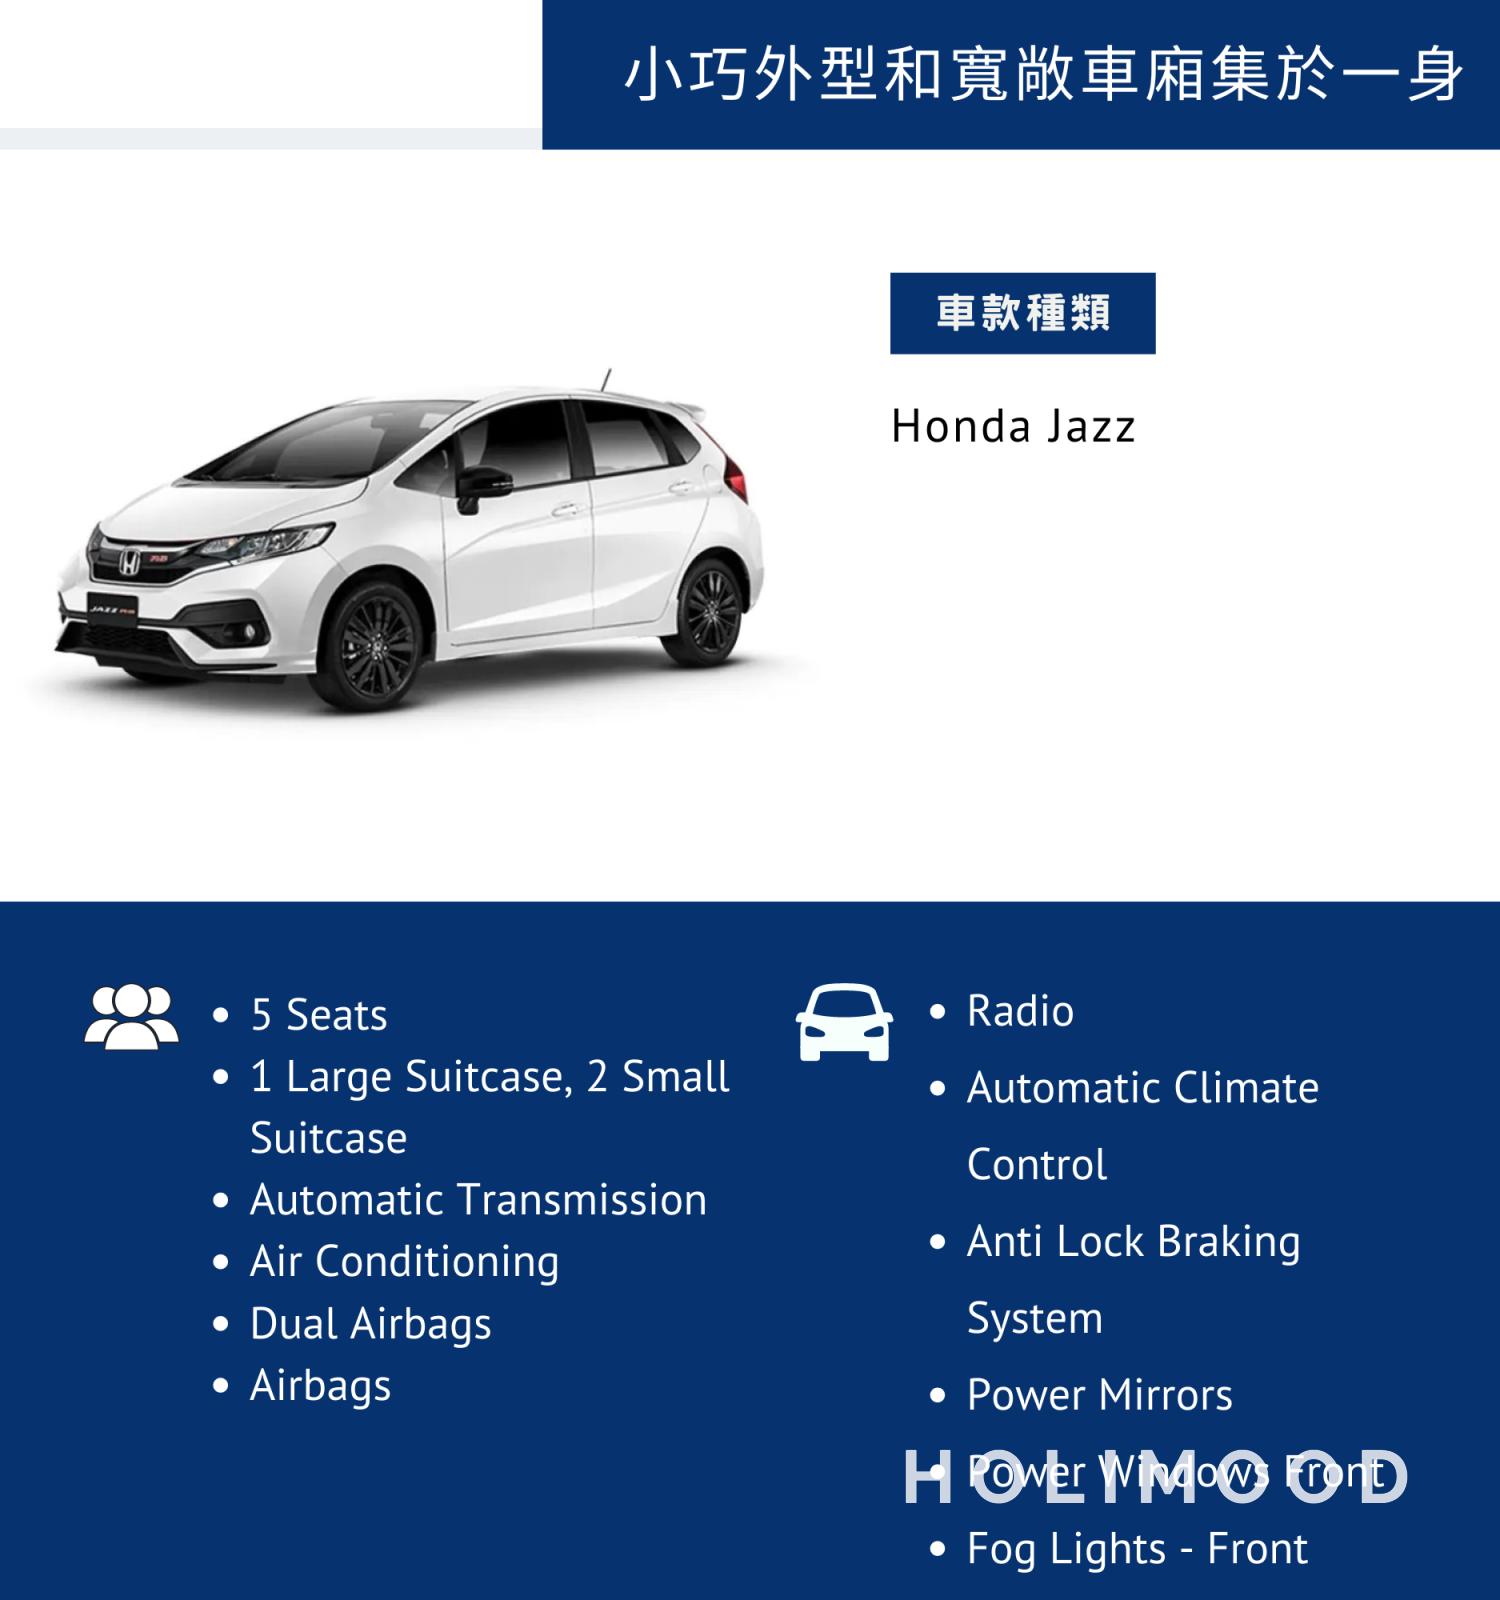 DCH Mobility Car Rent x Holimood Promotion 【車身小巧】Honda Jazz - 實用慳油5人車 (月租) 1